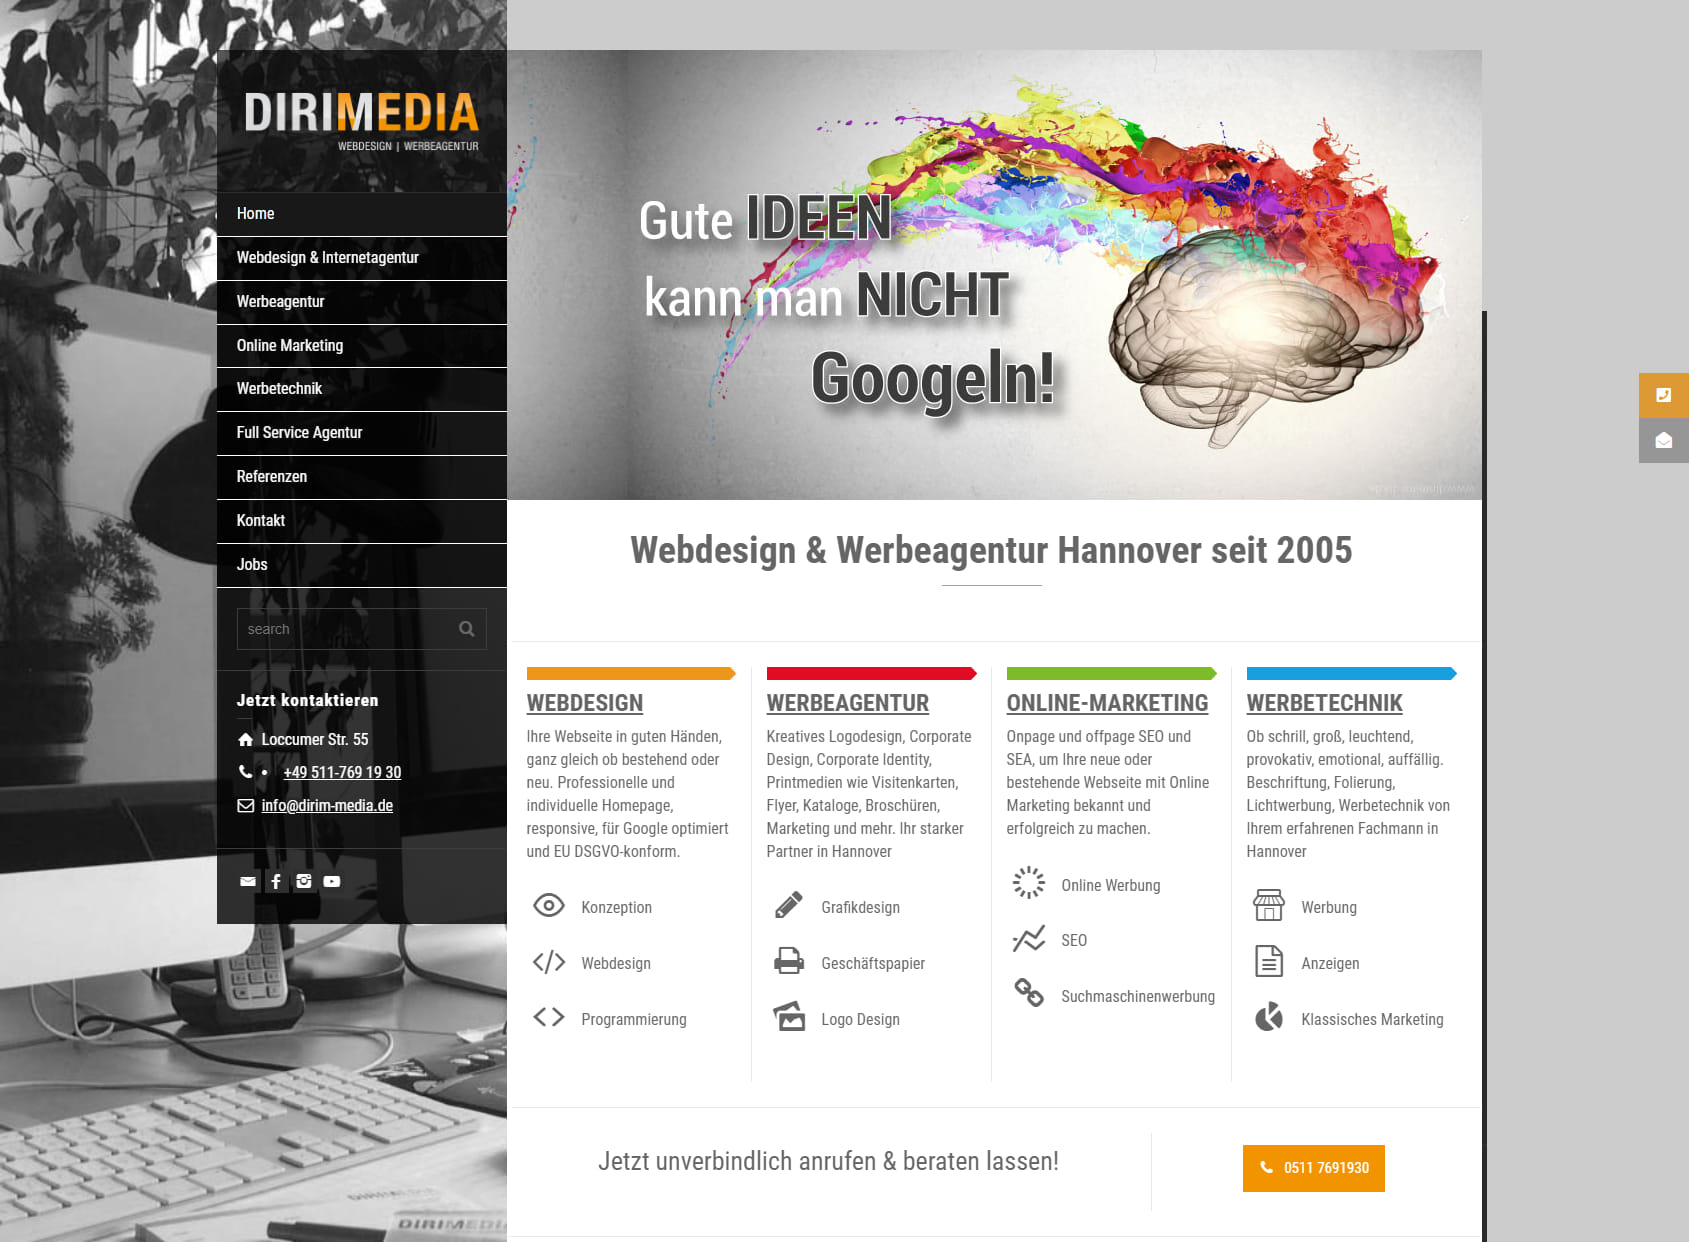 Dirim Media | Web design & advertising agency